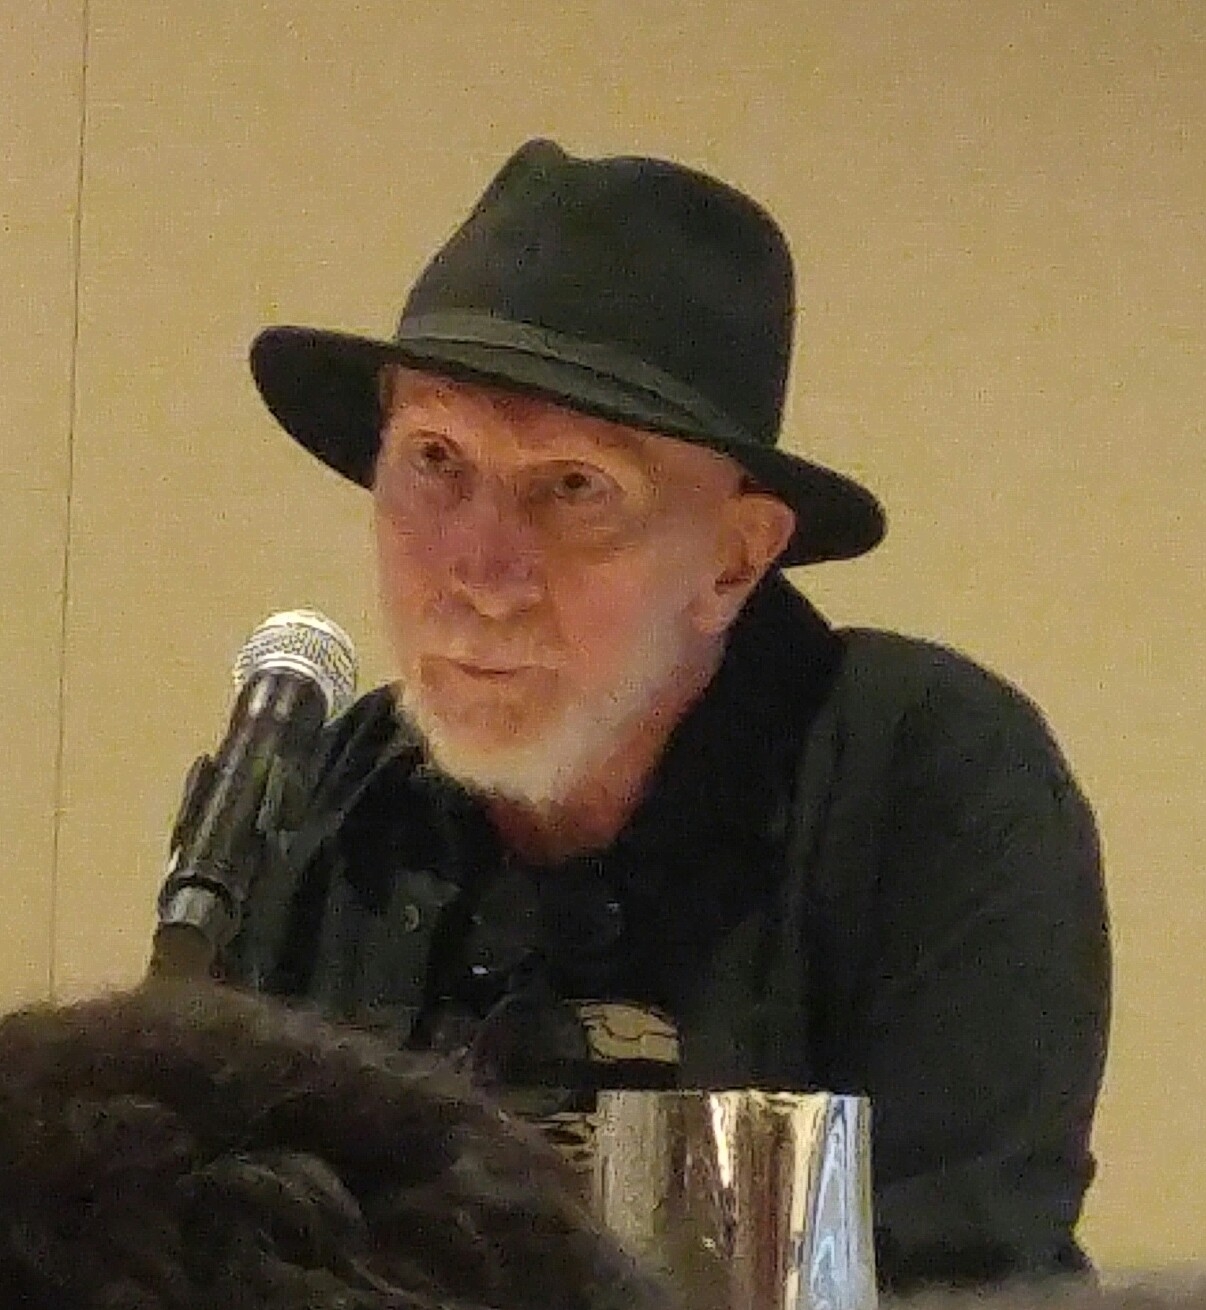 Frank Miller at Boston Comic Con